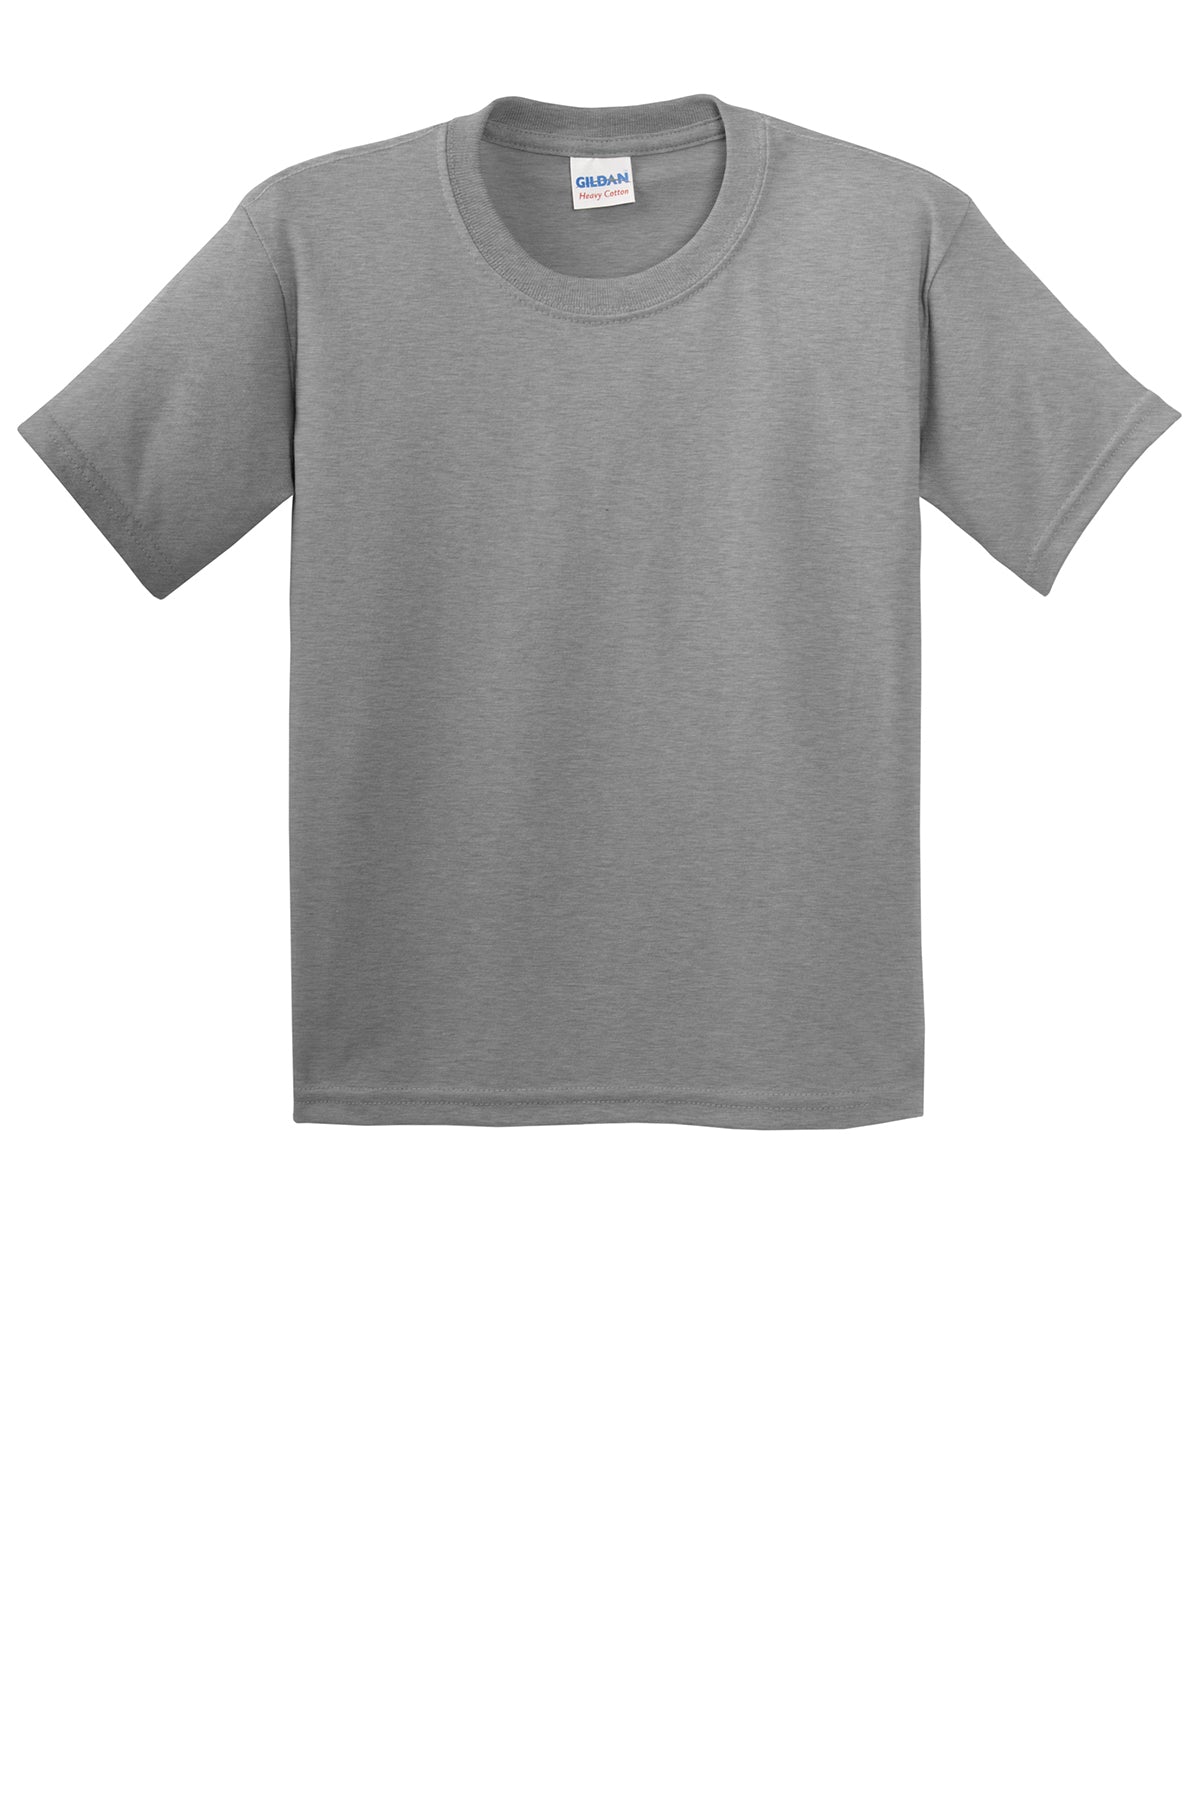 Gildan Youth S/S Shirts Sport Grey